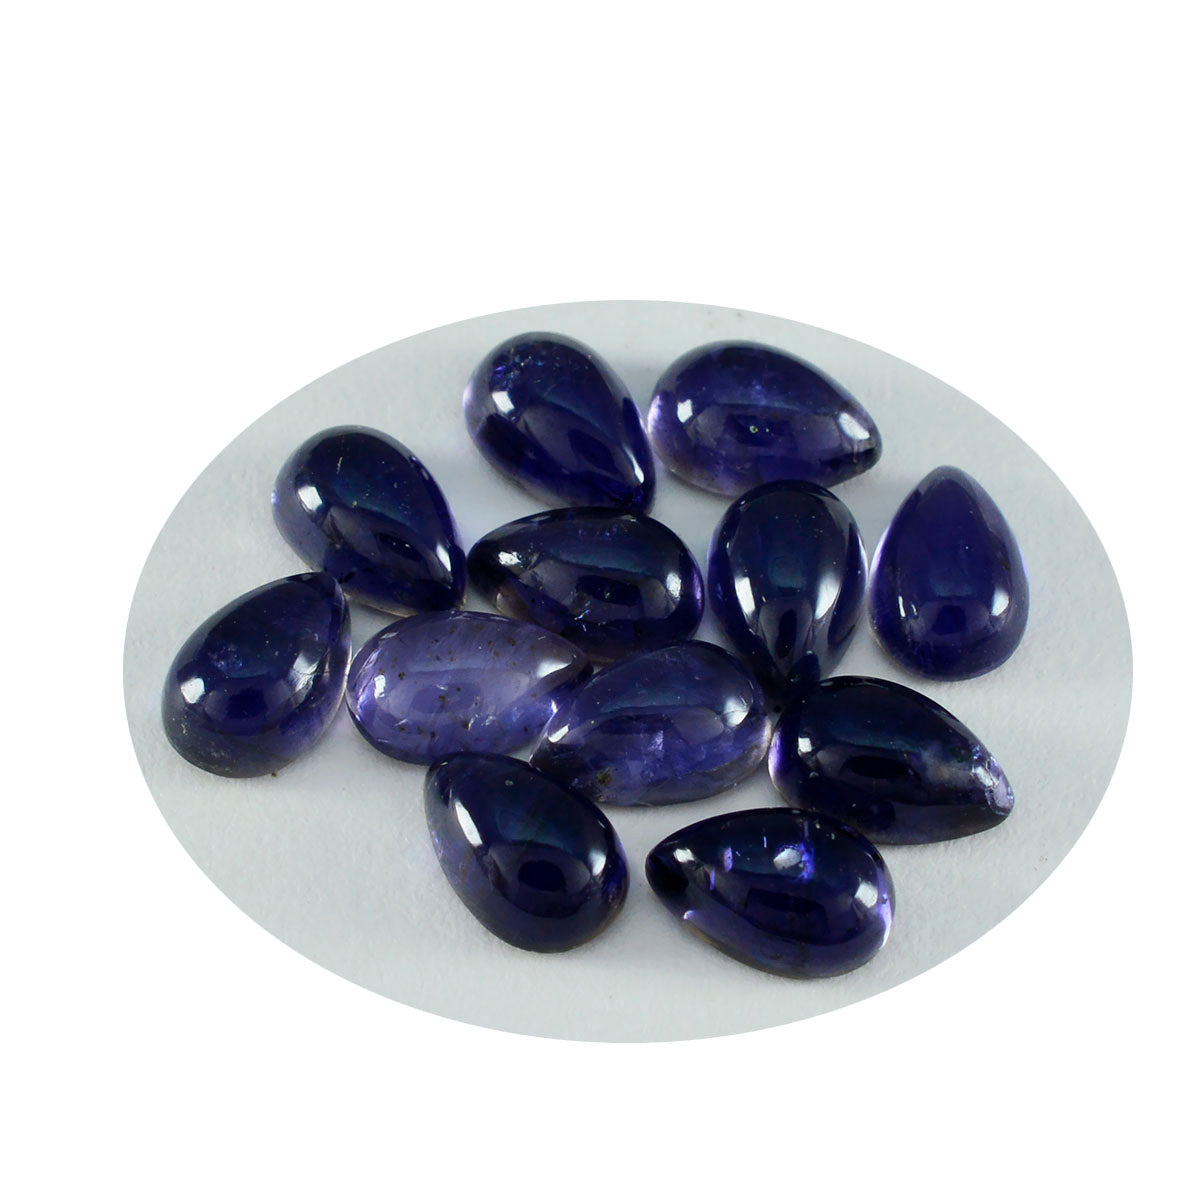 Riyogems 1PC Blue Iolite Cabochon 5x7 mm Pear Shape wonderful Quality Stone